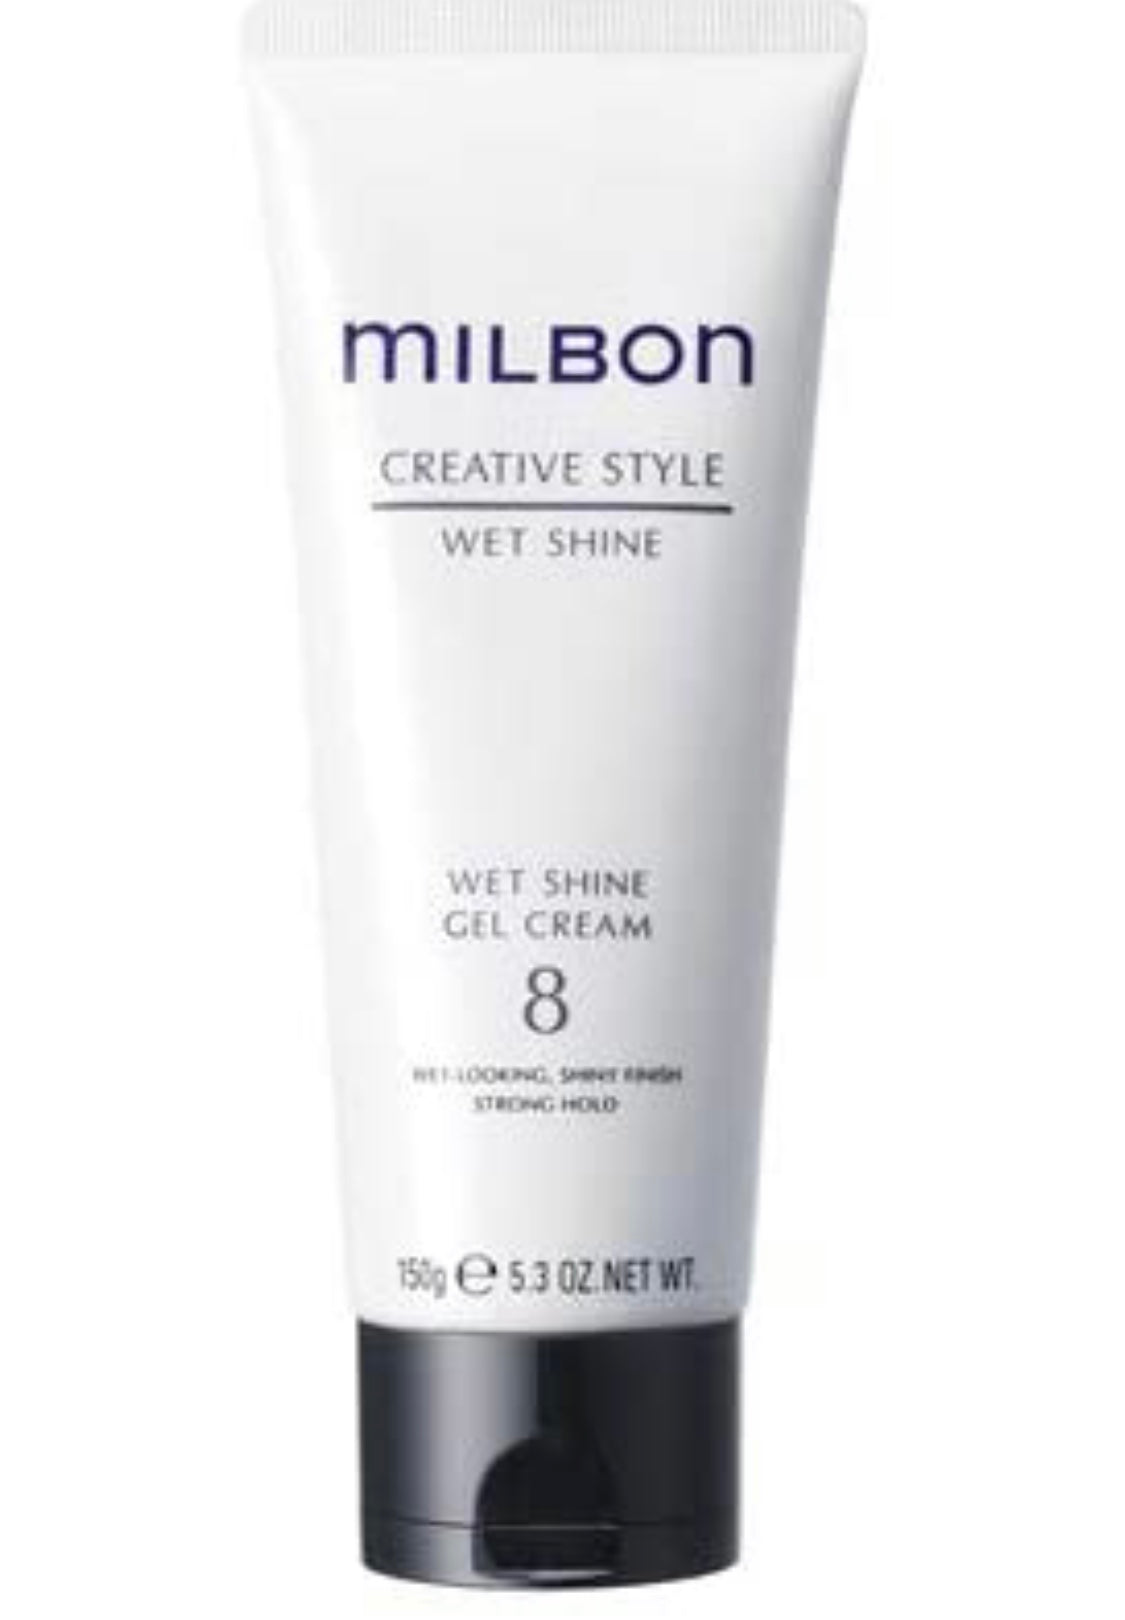 Milbon - Creative style Wet shine gel cream  #8 5.3 fl. oz. / 150 gr